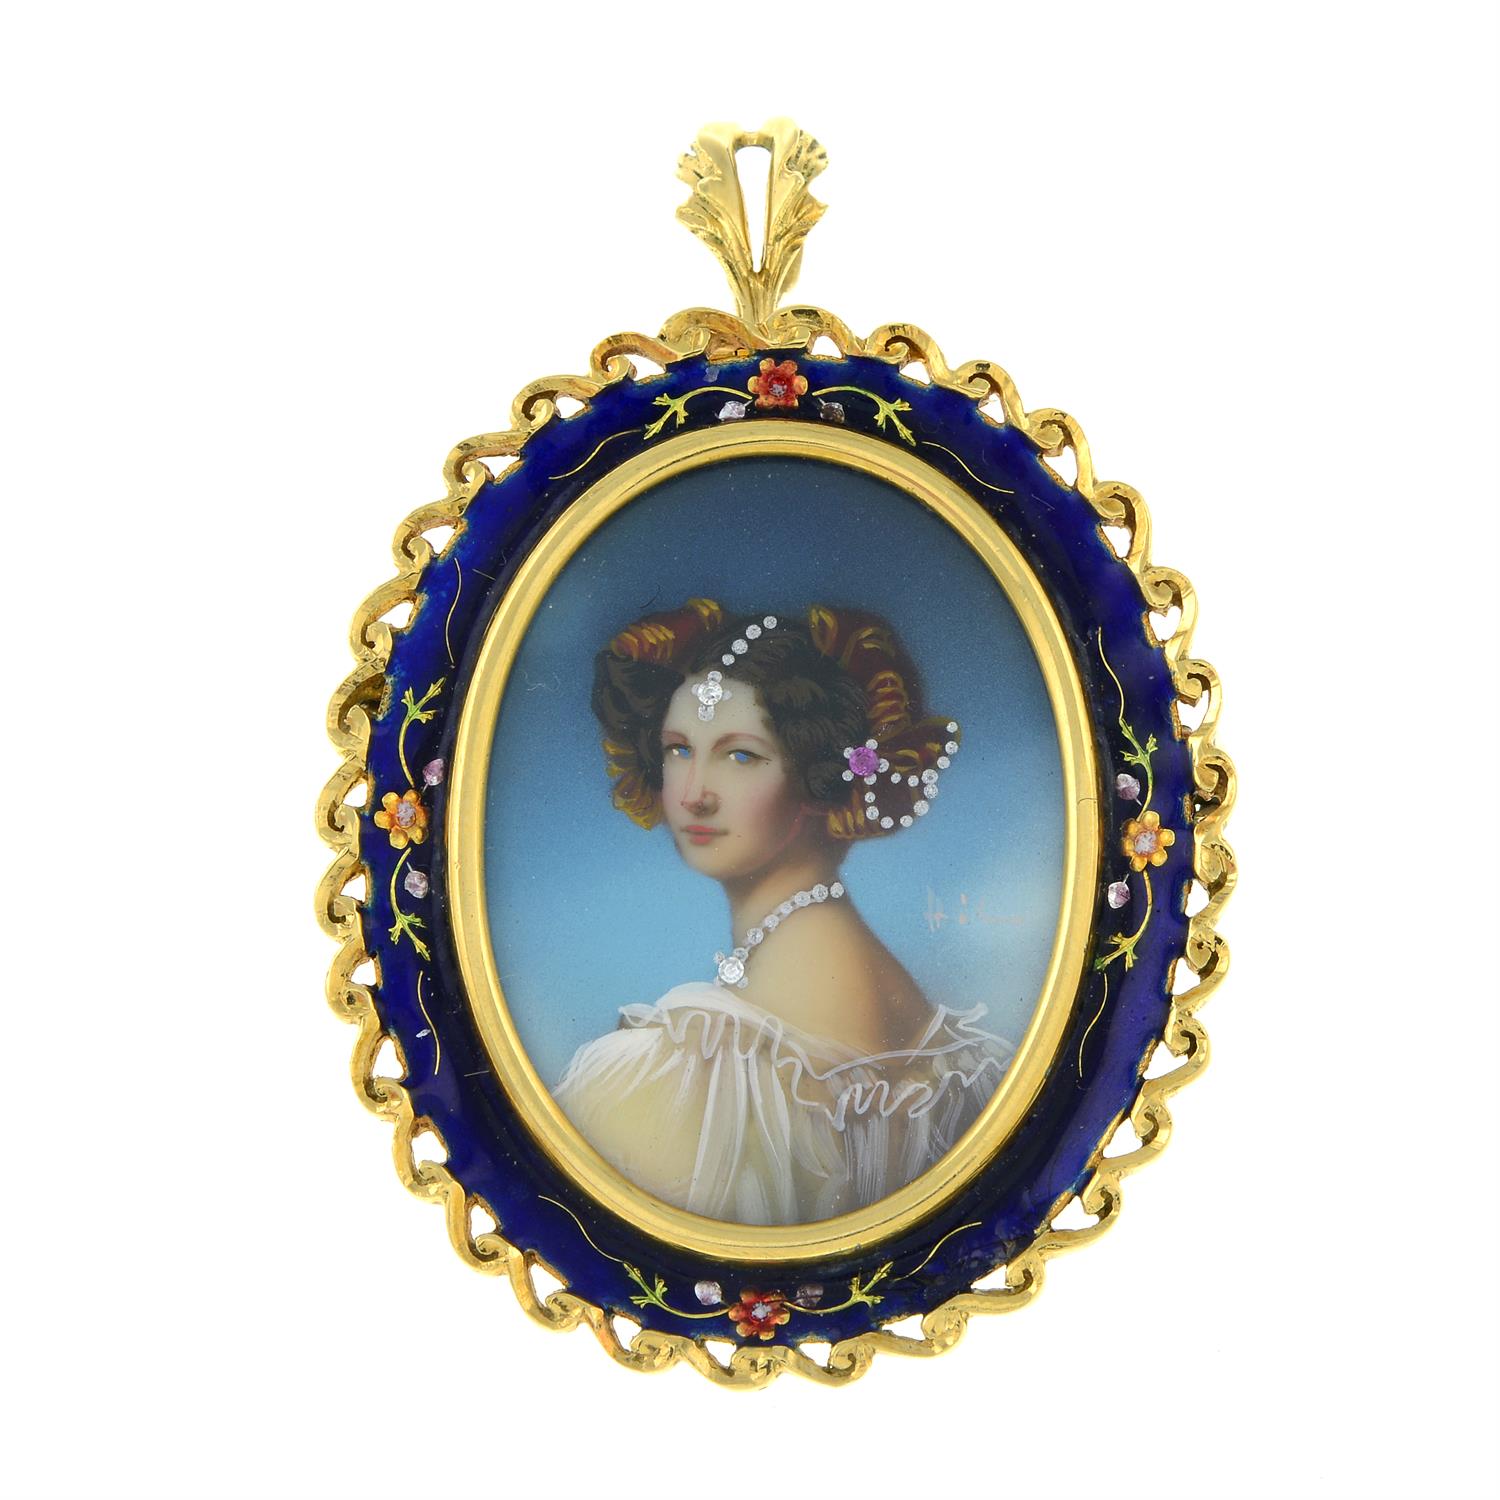 An 18ct gold gem-set enamel portrait brooch/pendant, depicting a woman looking over her shoulder.